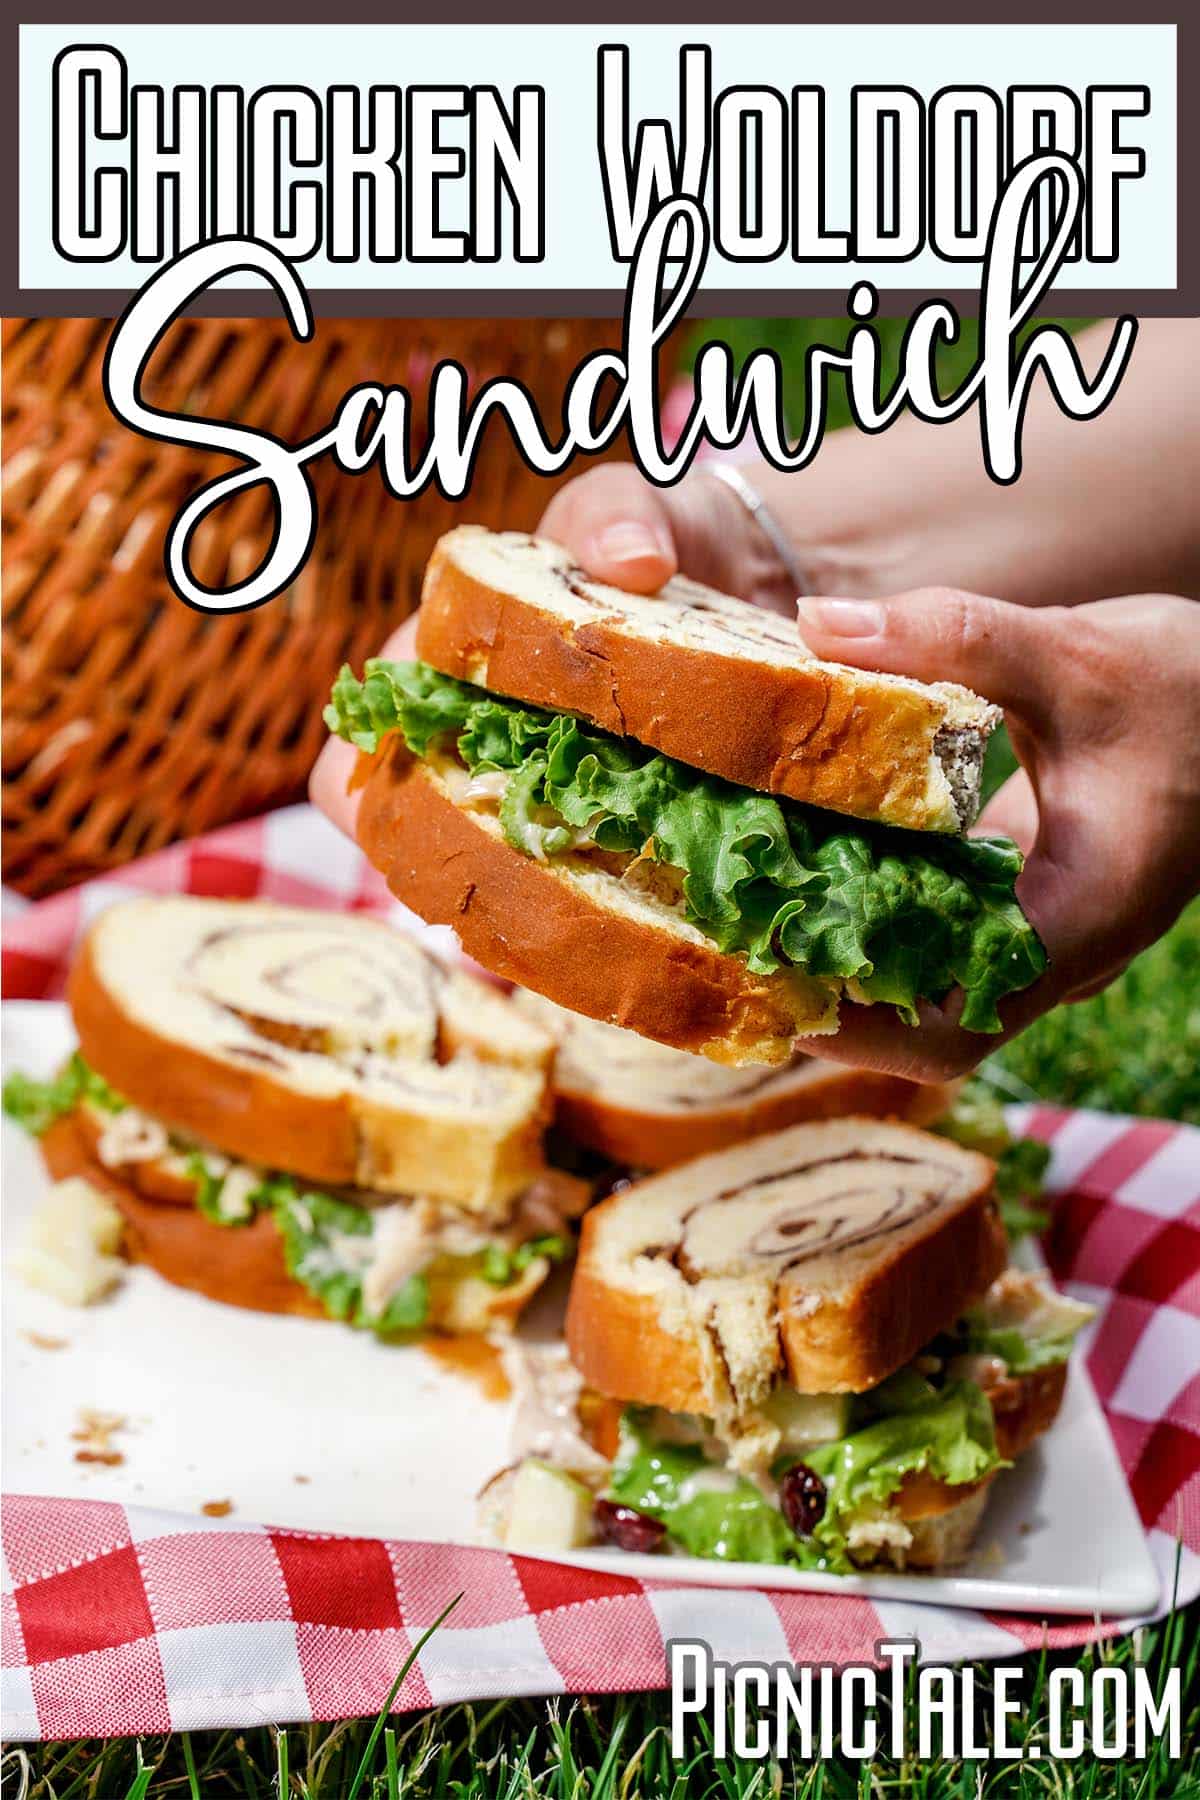 Chicken Waldorf sandwich, holding sandwich with wording on top.